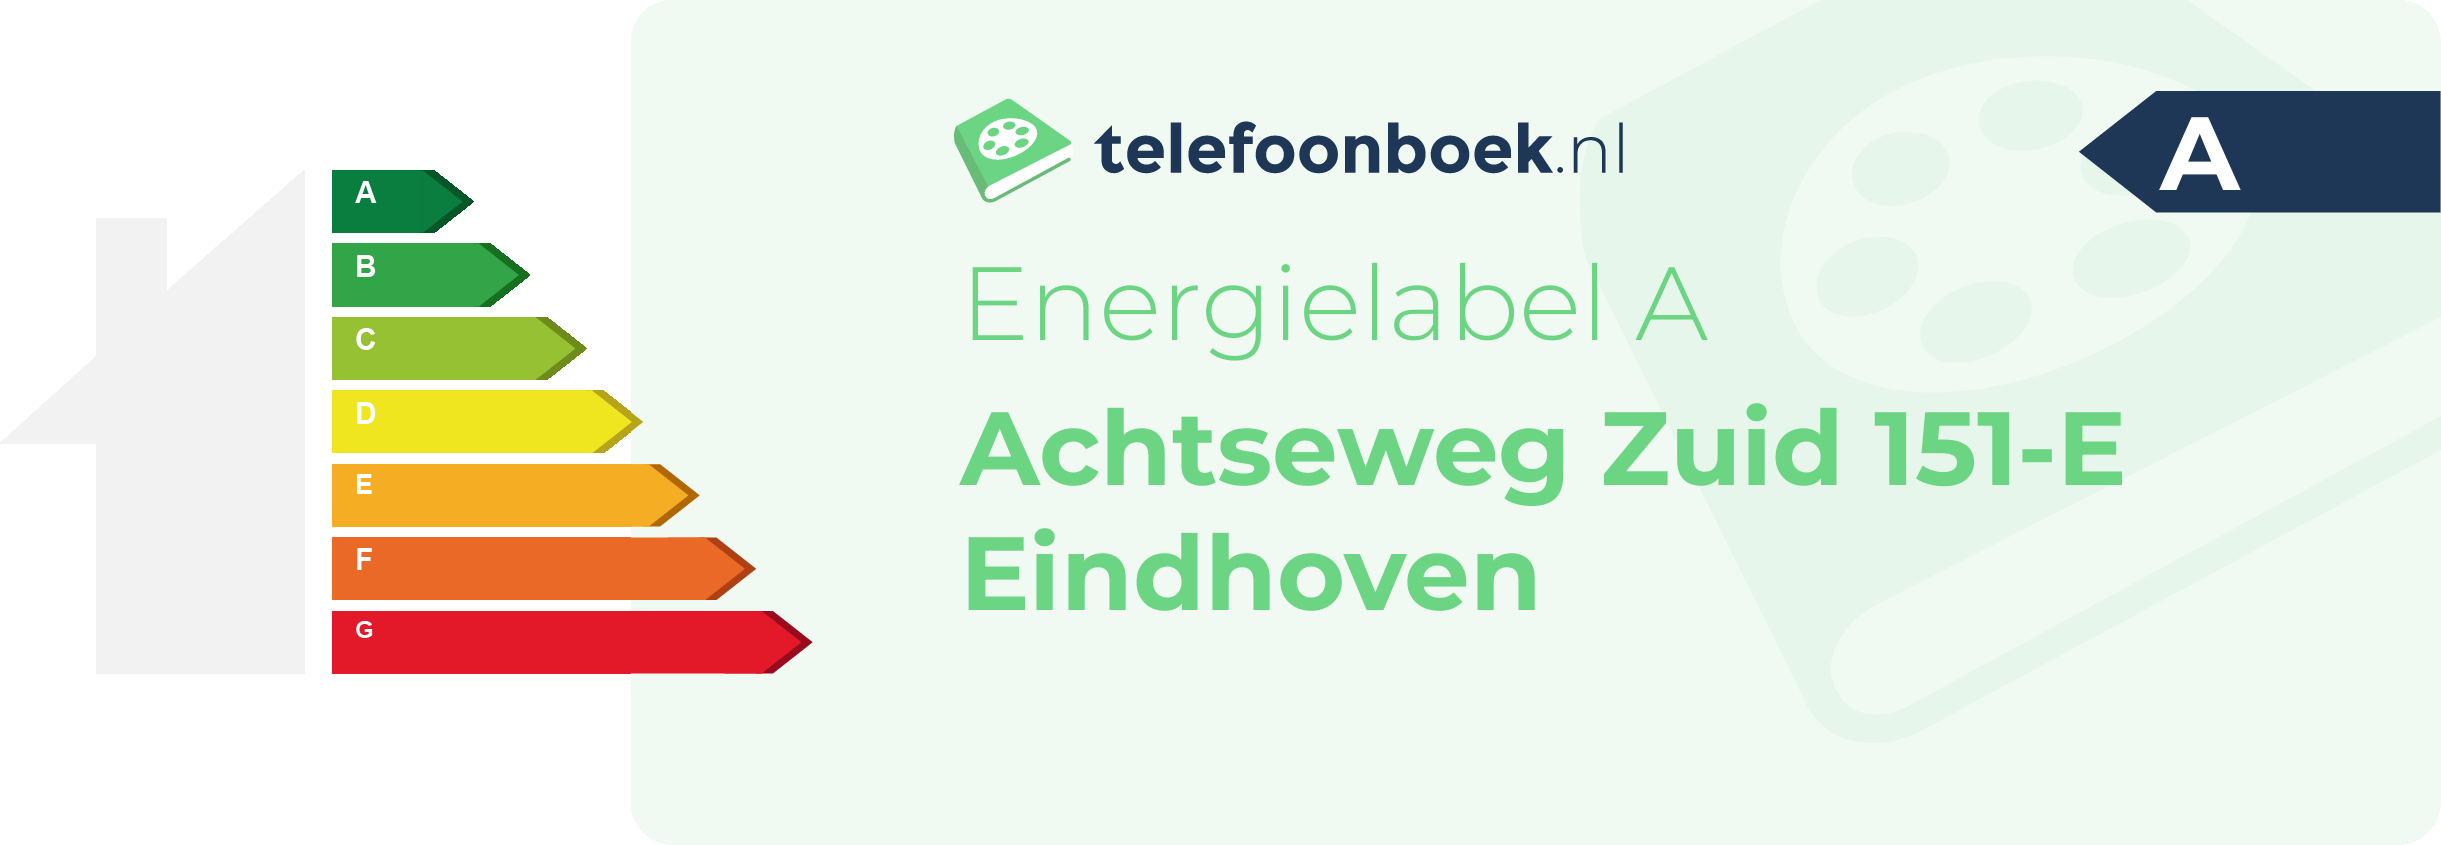 Energielabel Achtseweg Zuid 151-E Eindhoven